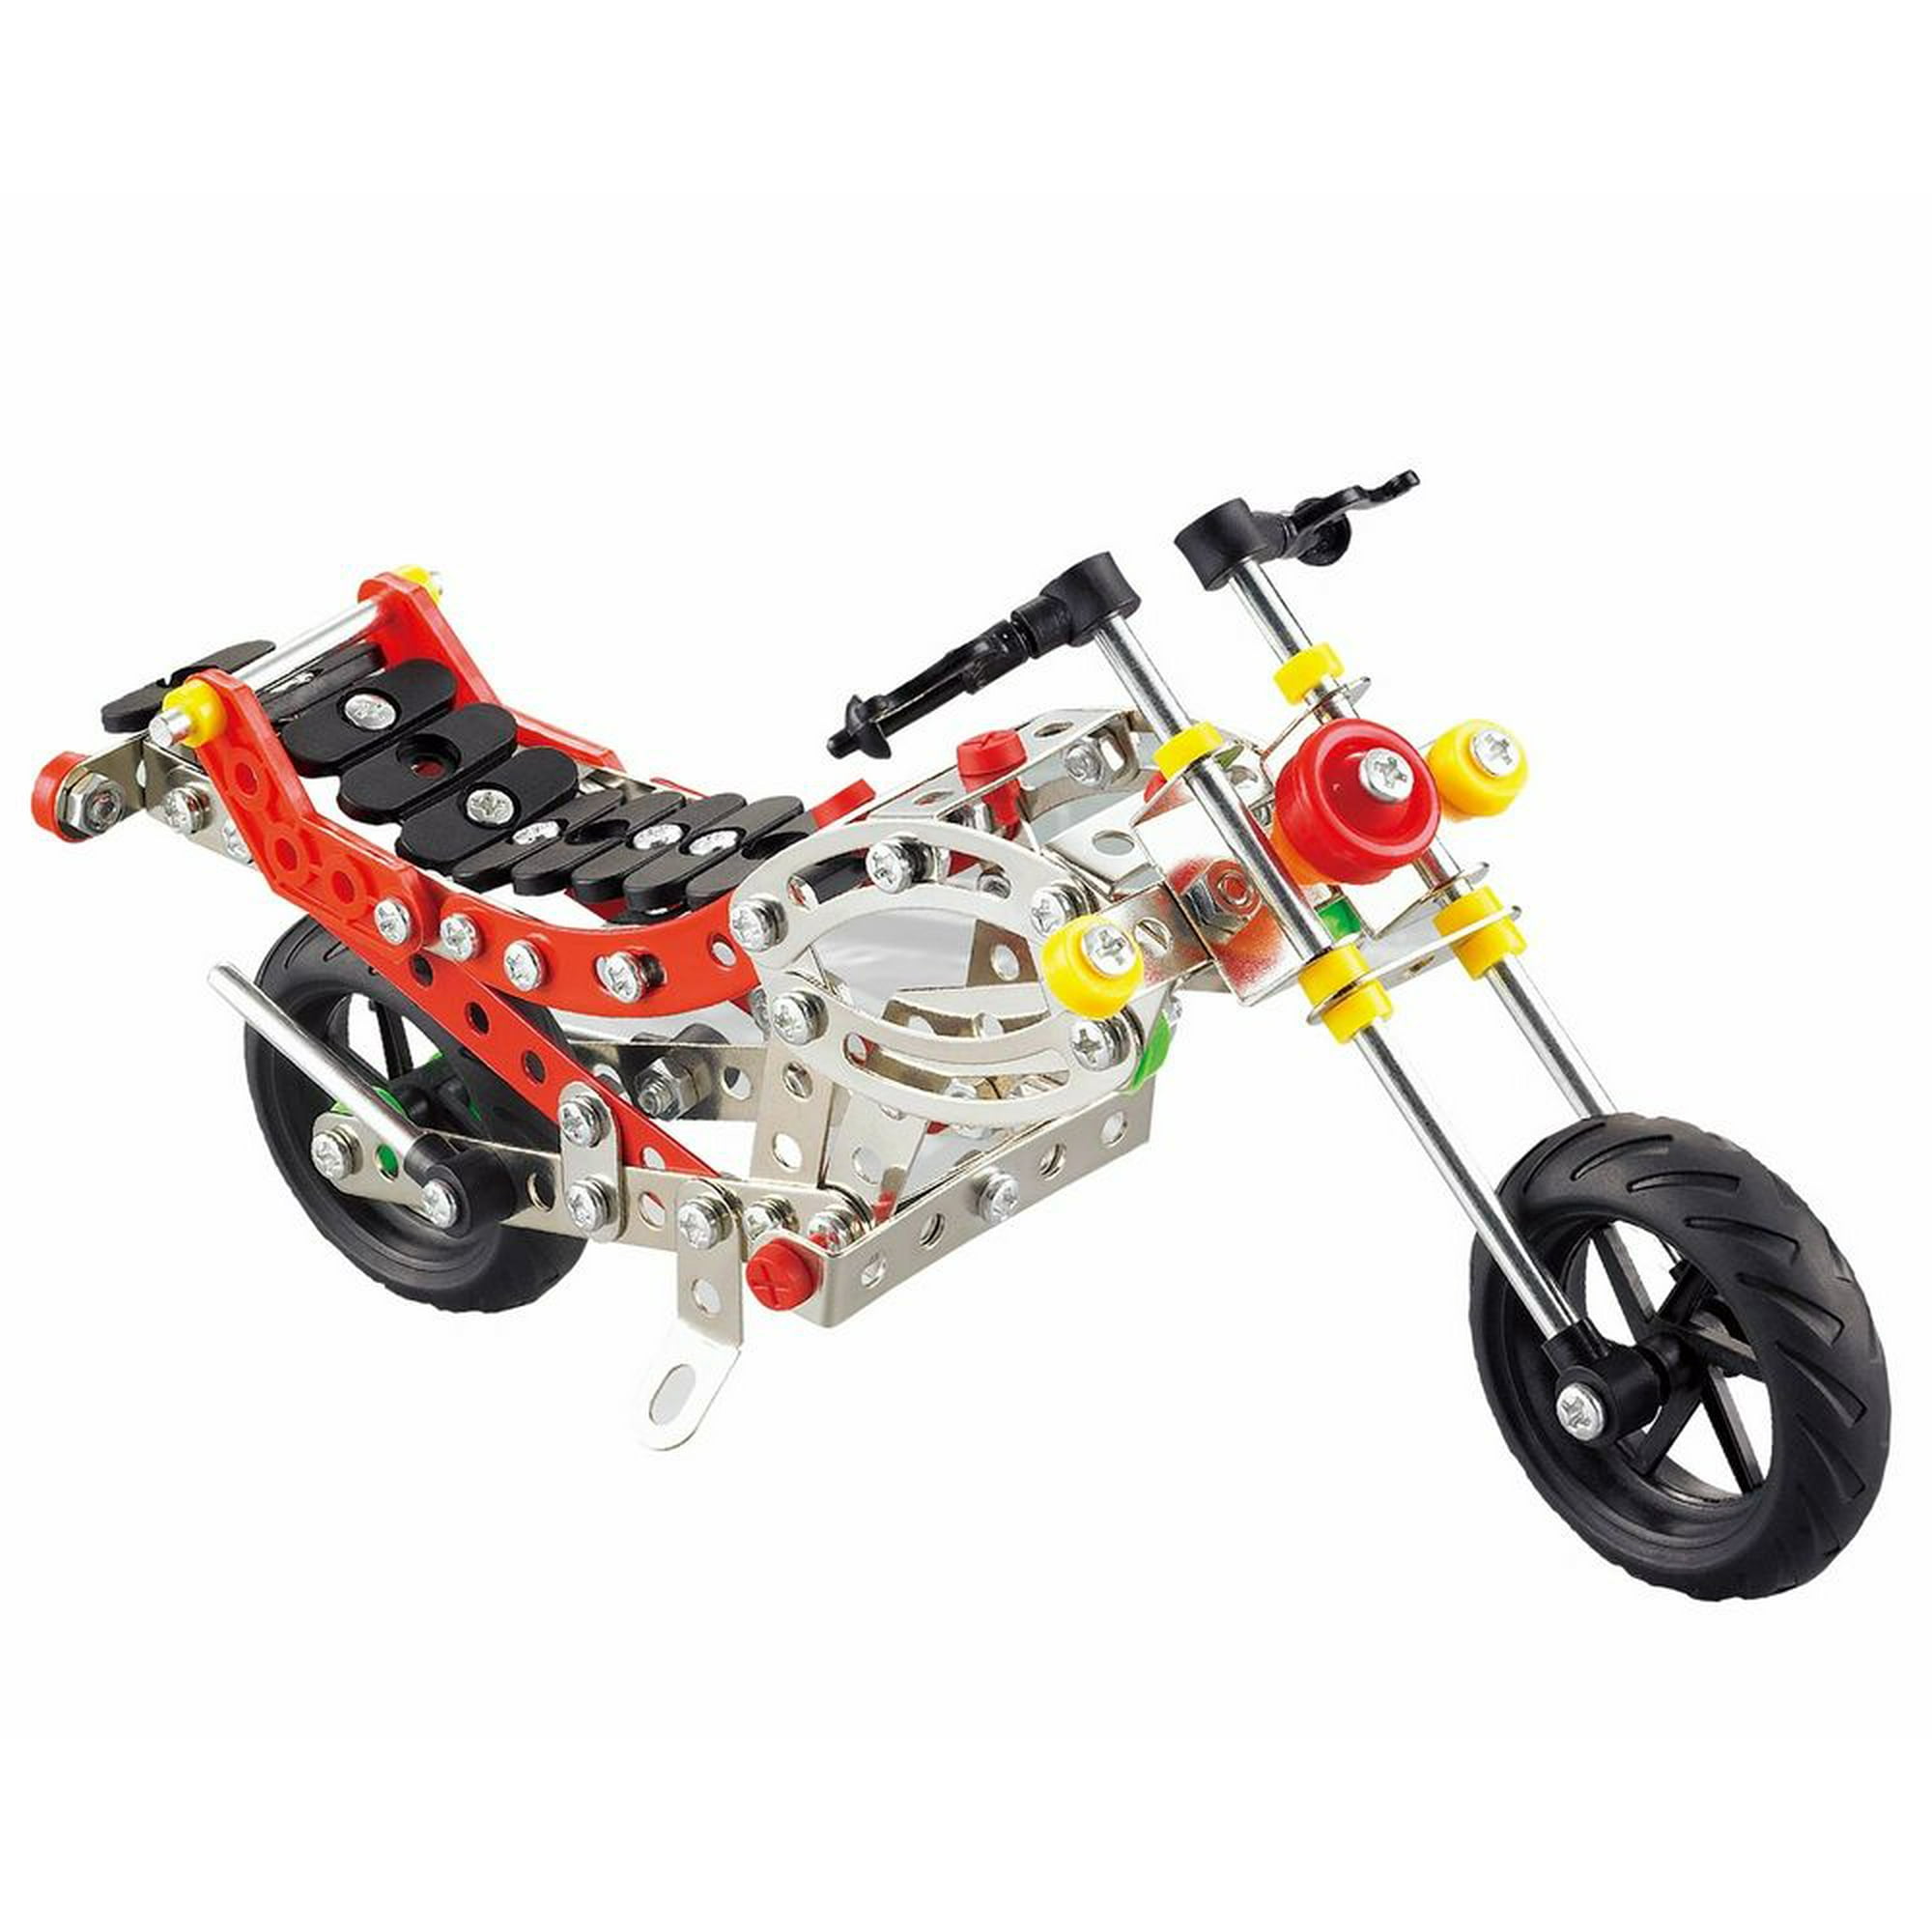 Play with tools grande motocicleta chopper wuundentoy 3606